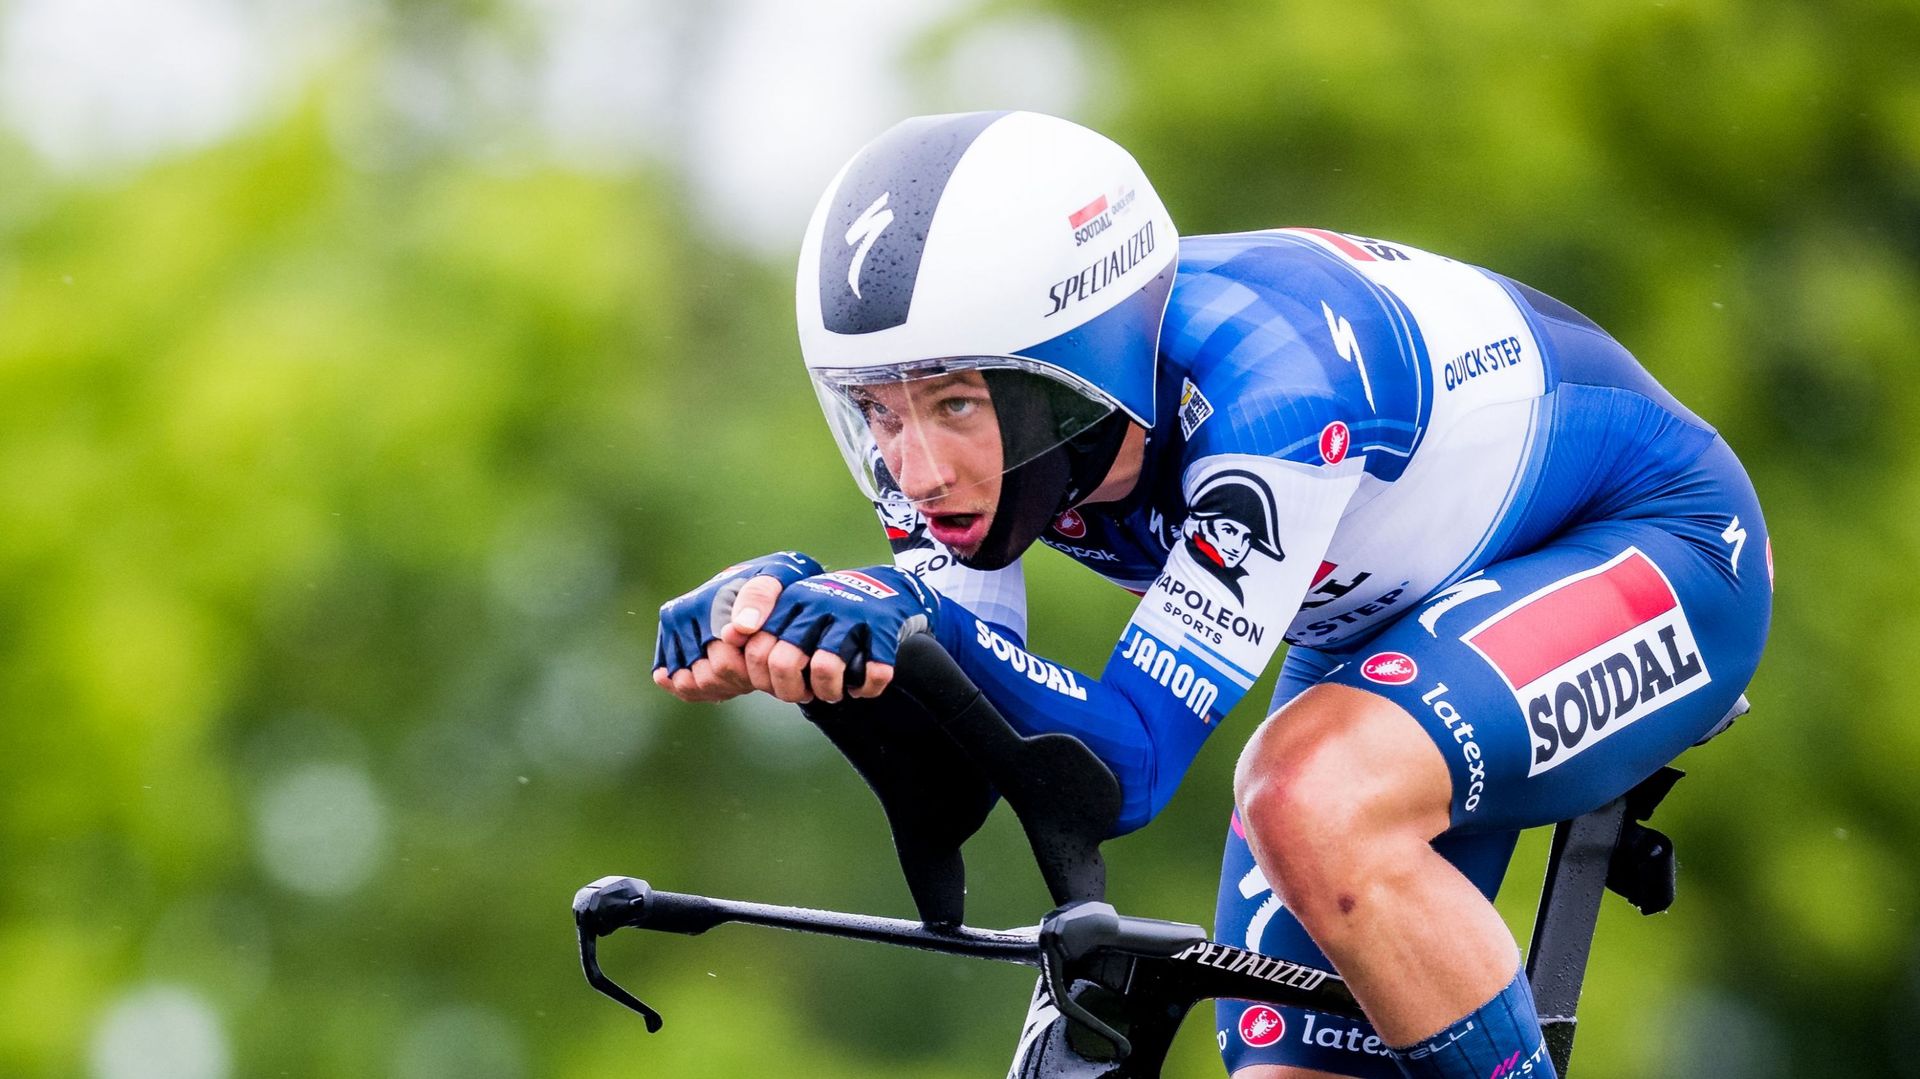 Elan van Wilder, 12° al Giro, ‘potrebbe essere un leader in un futuro Grand Tour’ come crede Gerard Bolens